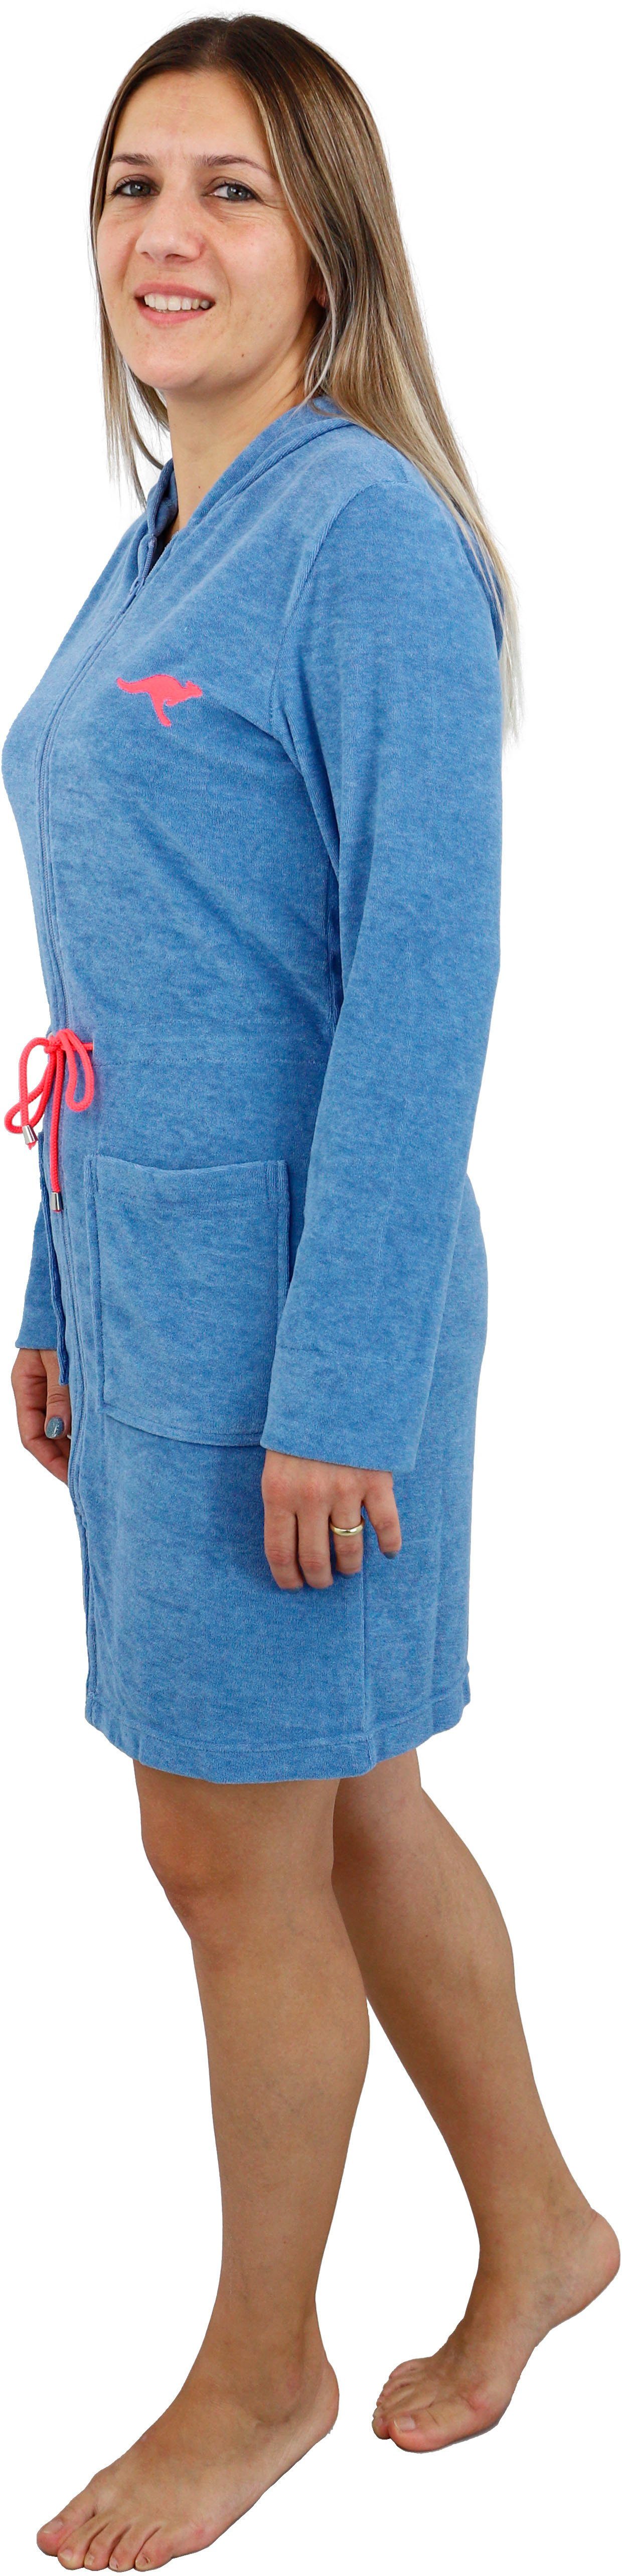 KangaROOS Damenbademantel Kira, mit blau Bindekordel, XS-3XL für Kapuze, kurz, melange Damen, Reißverschluss, Bademäntel Kurzform